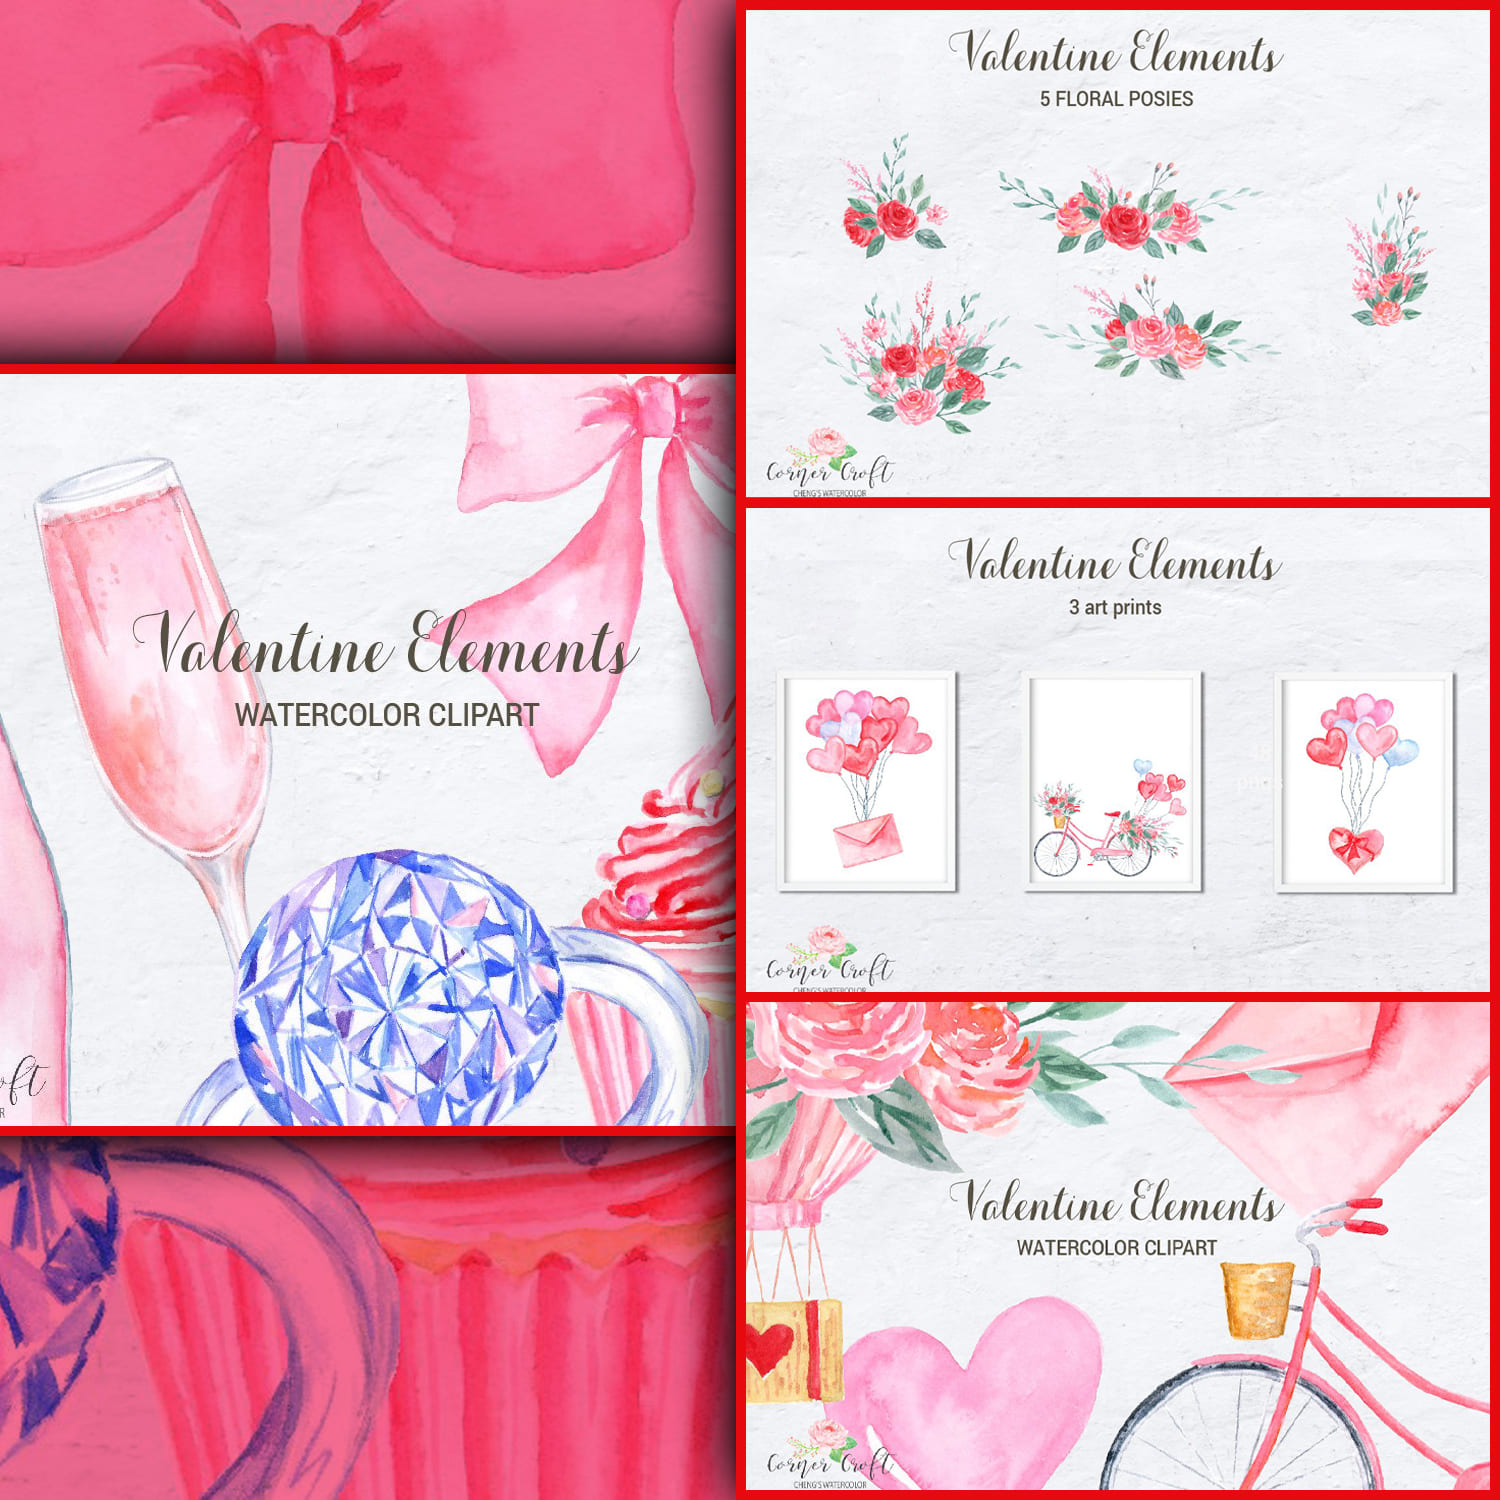 Watercolor Valentine Elements by Corner craft.